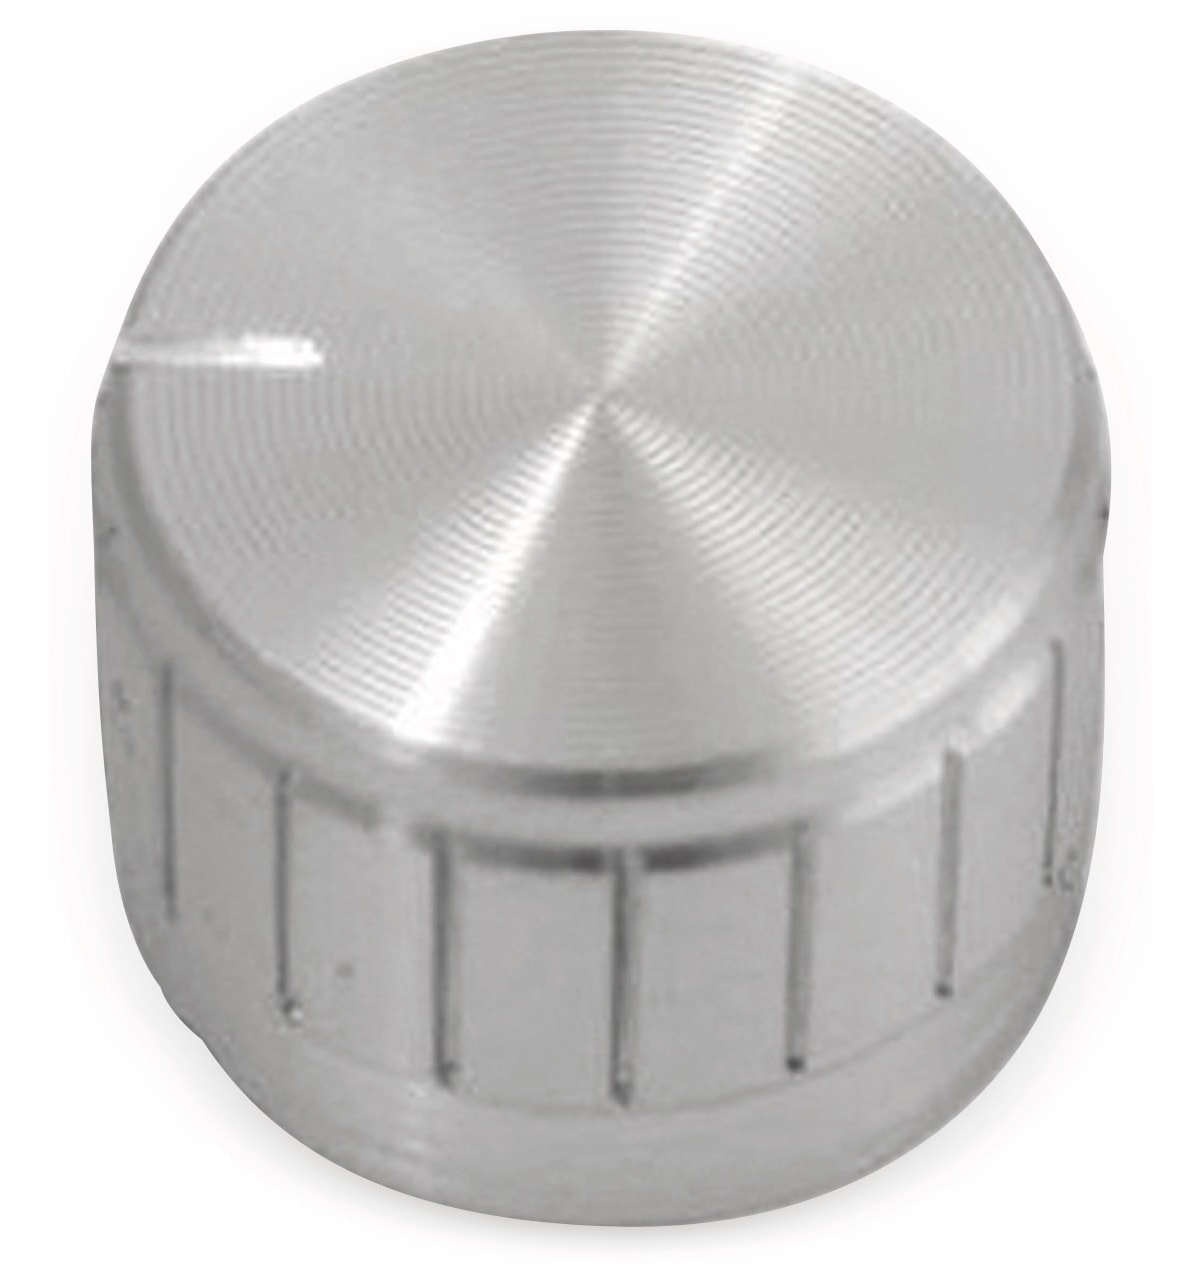 Aluminium-Drehknopf mit Zeigernase, 23x17 mm, silber